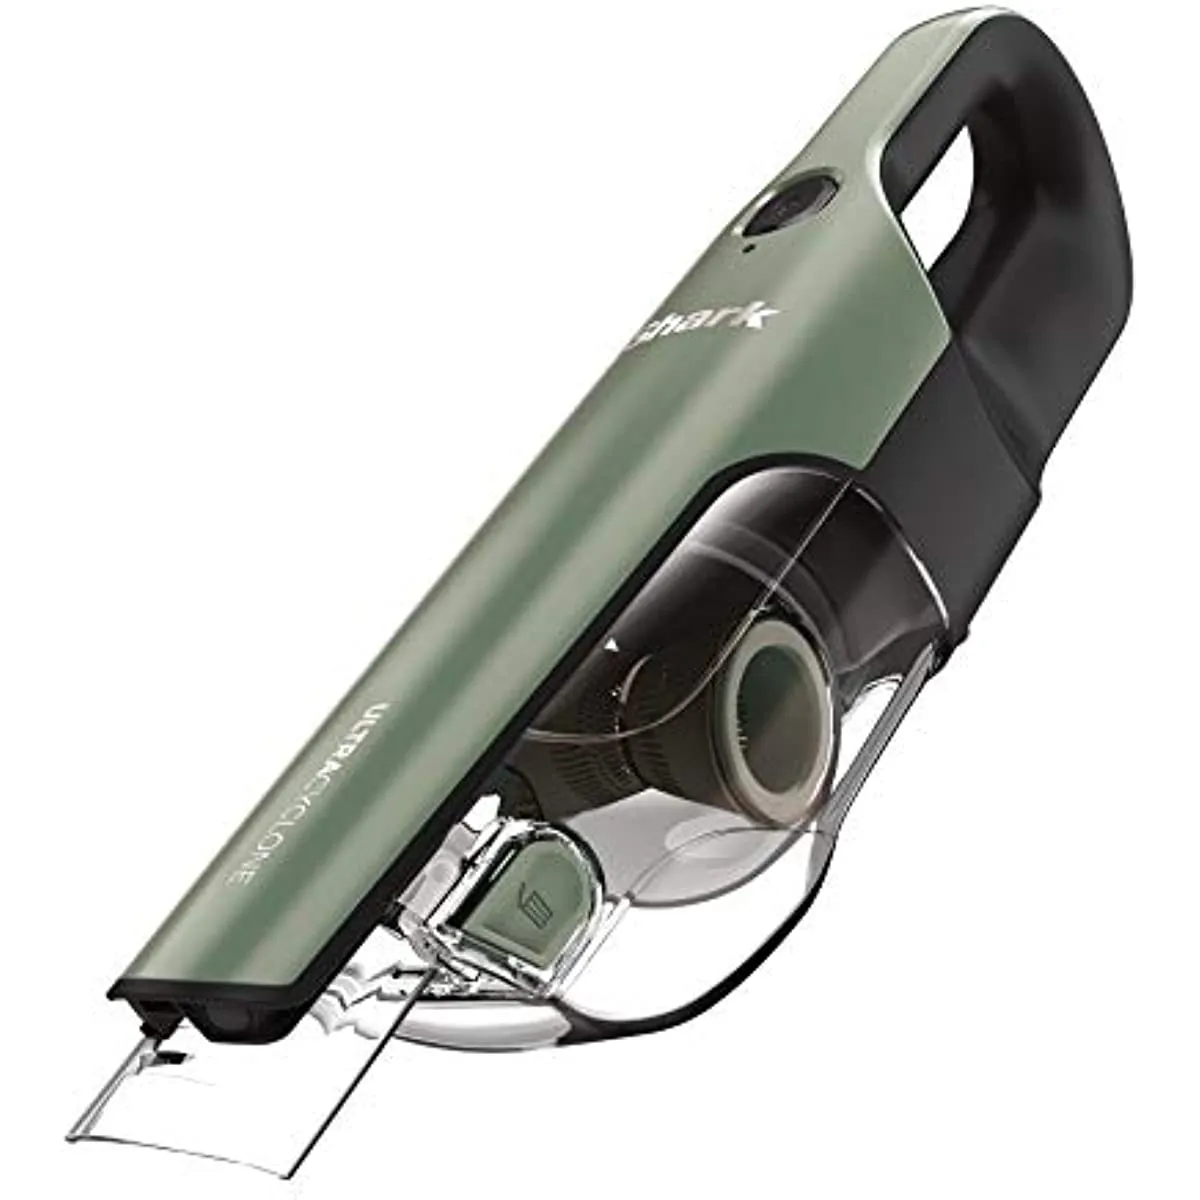 Shark Ultracyclone Pro 무선 핸드 헬드 진공 청소기, XL 더스트 컵, 녹색